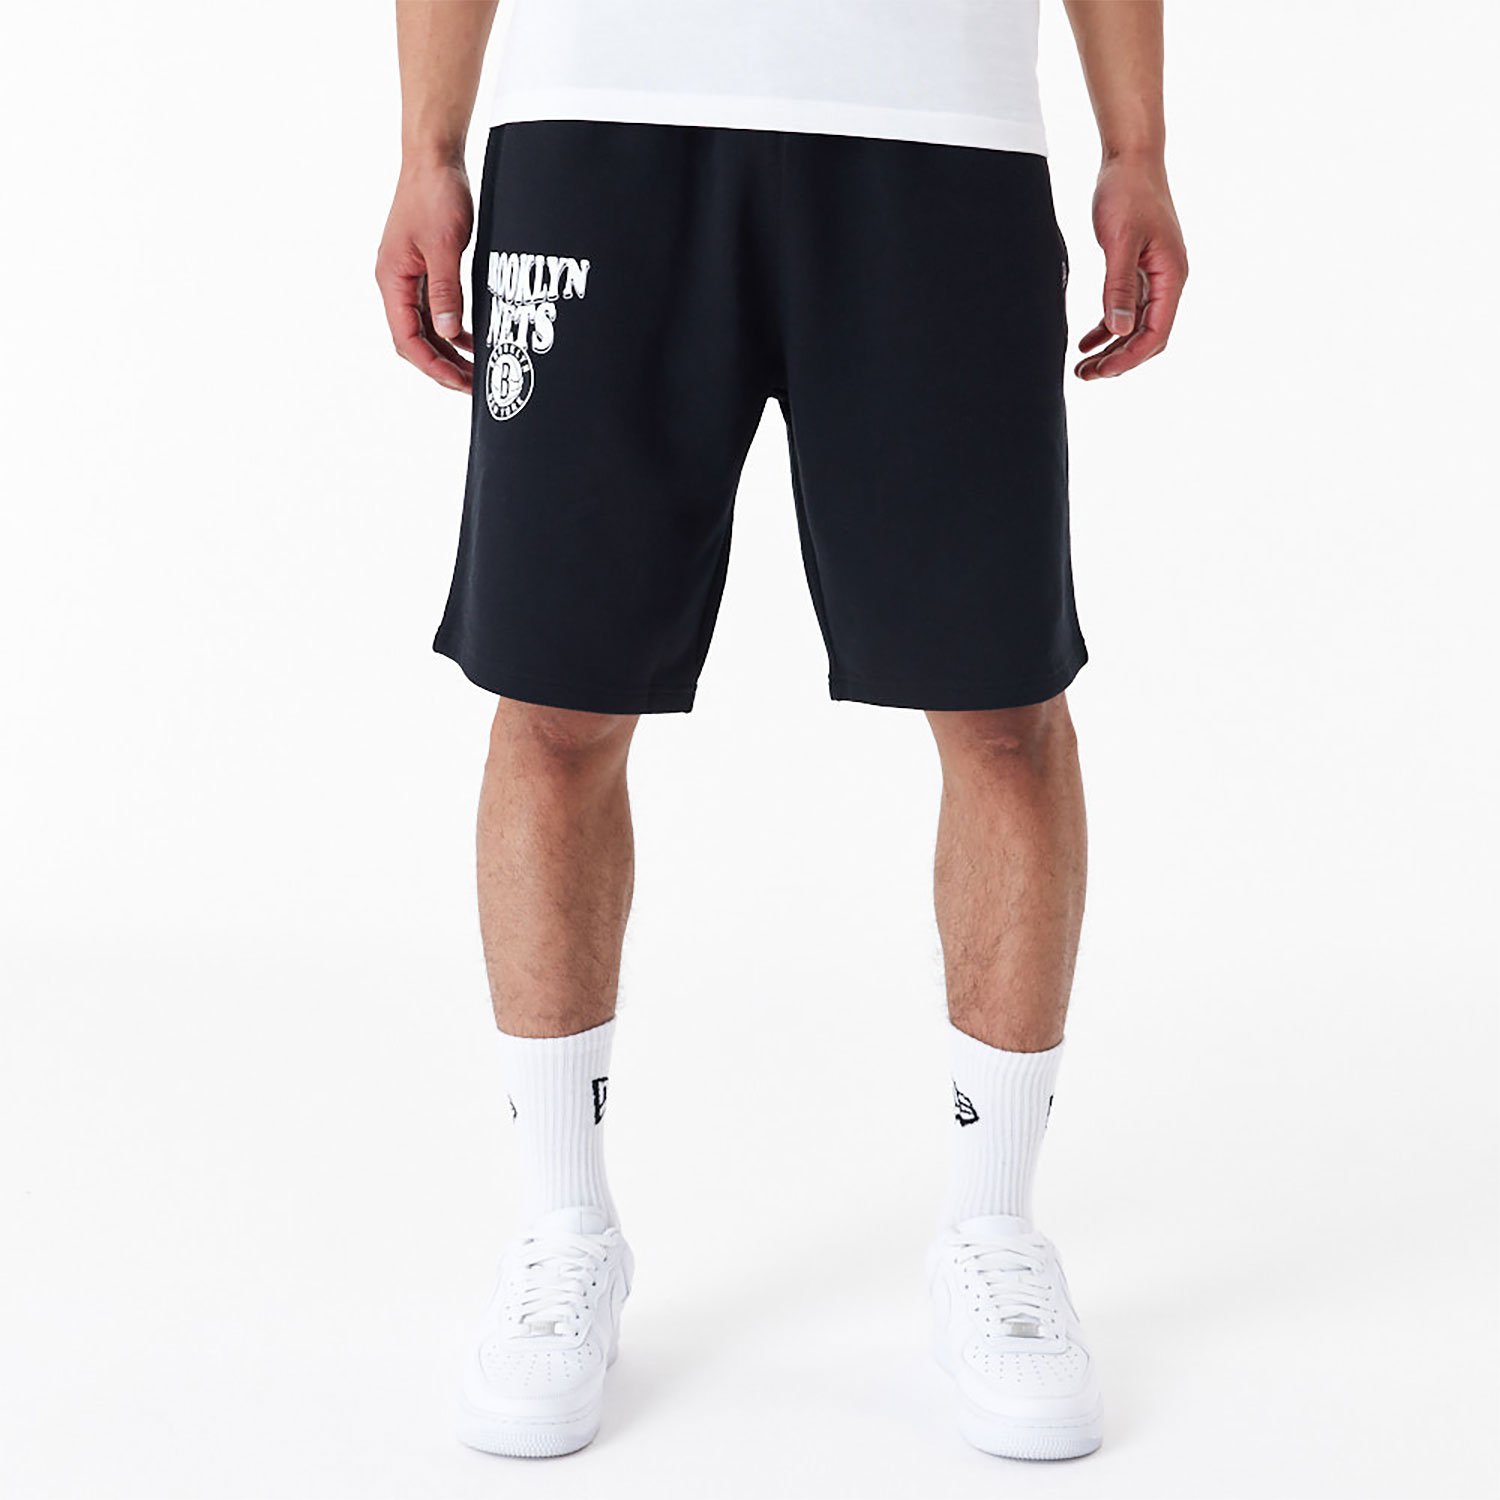 Brooklyn Nets NBA Script Black Oversized Shorts